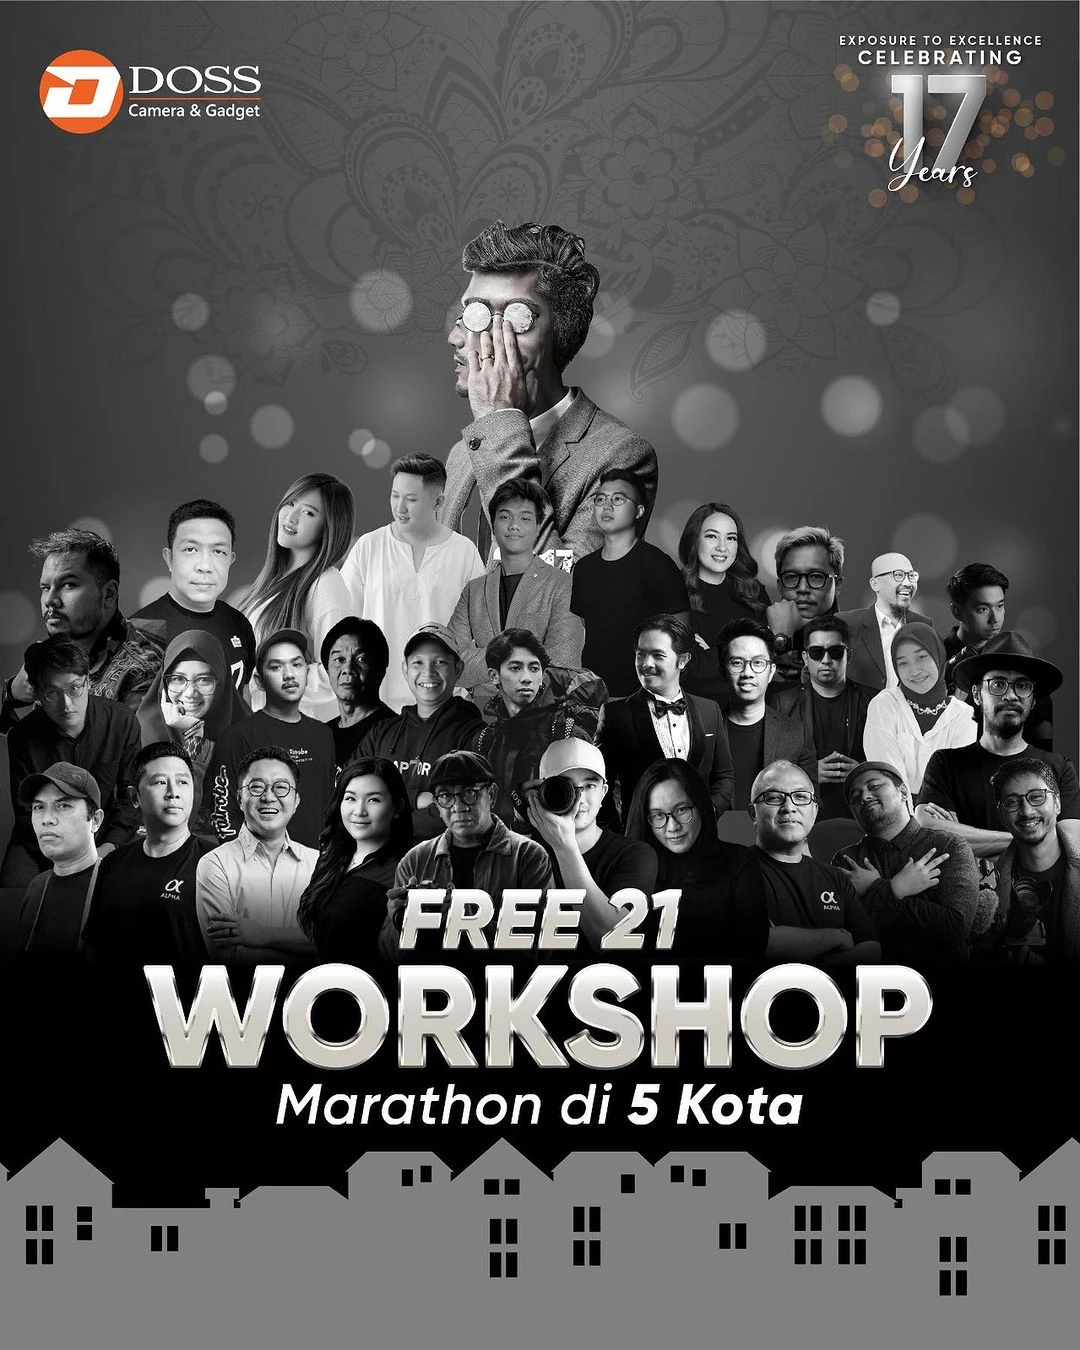 Ini Dia Daftar Free Workshop Fotografi & Videografi di Surabaya Special DOSS Anniversary ke 17, Jangan Lupa Buat Ikutan